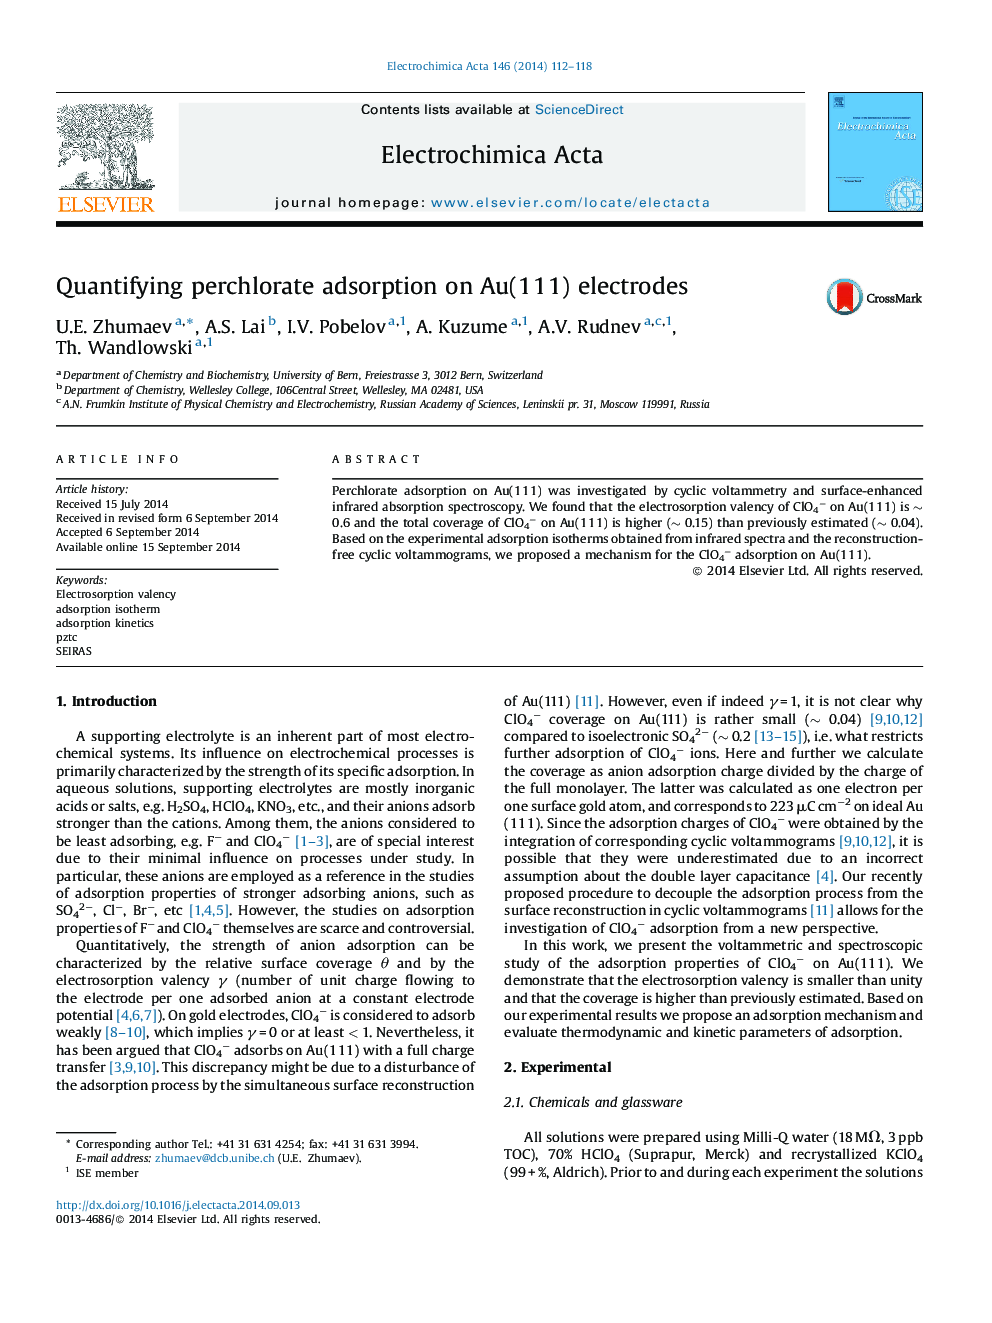 Quantifying perchlorate adsorption on Au(1Â 1Â 1) electrodes